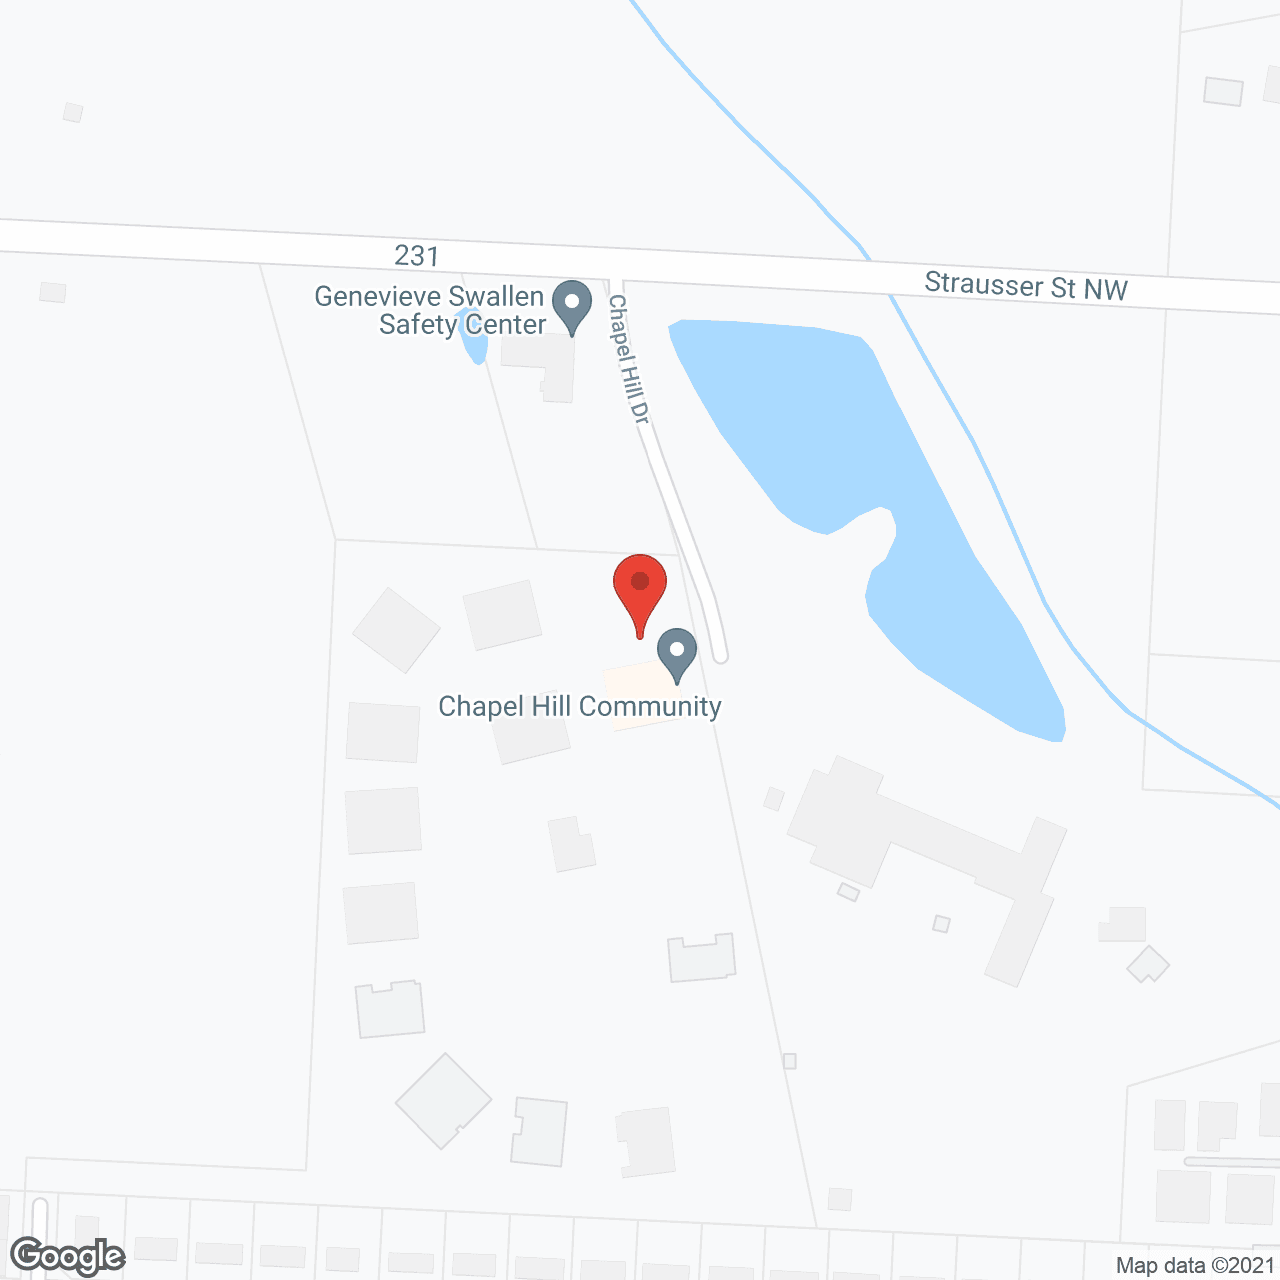 Chapel Hill Community in google map